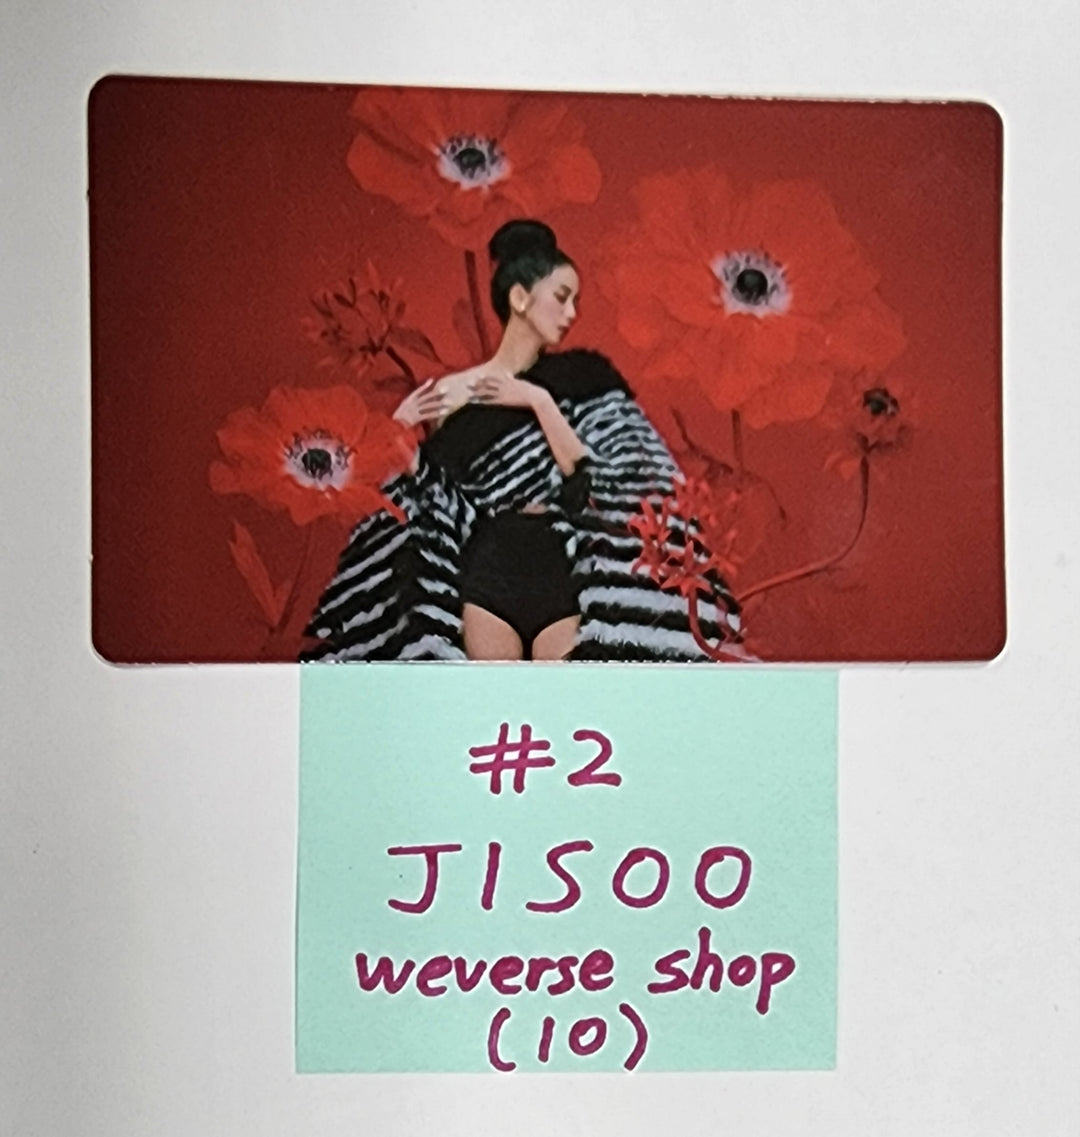 JISOO (Of Black Pink) "ME" 1st Single Album - Weverse Shop 予約特典フォトカード、ホログラムフォトスタンド